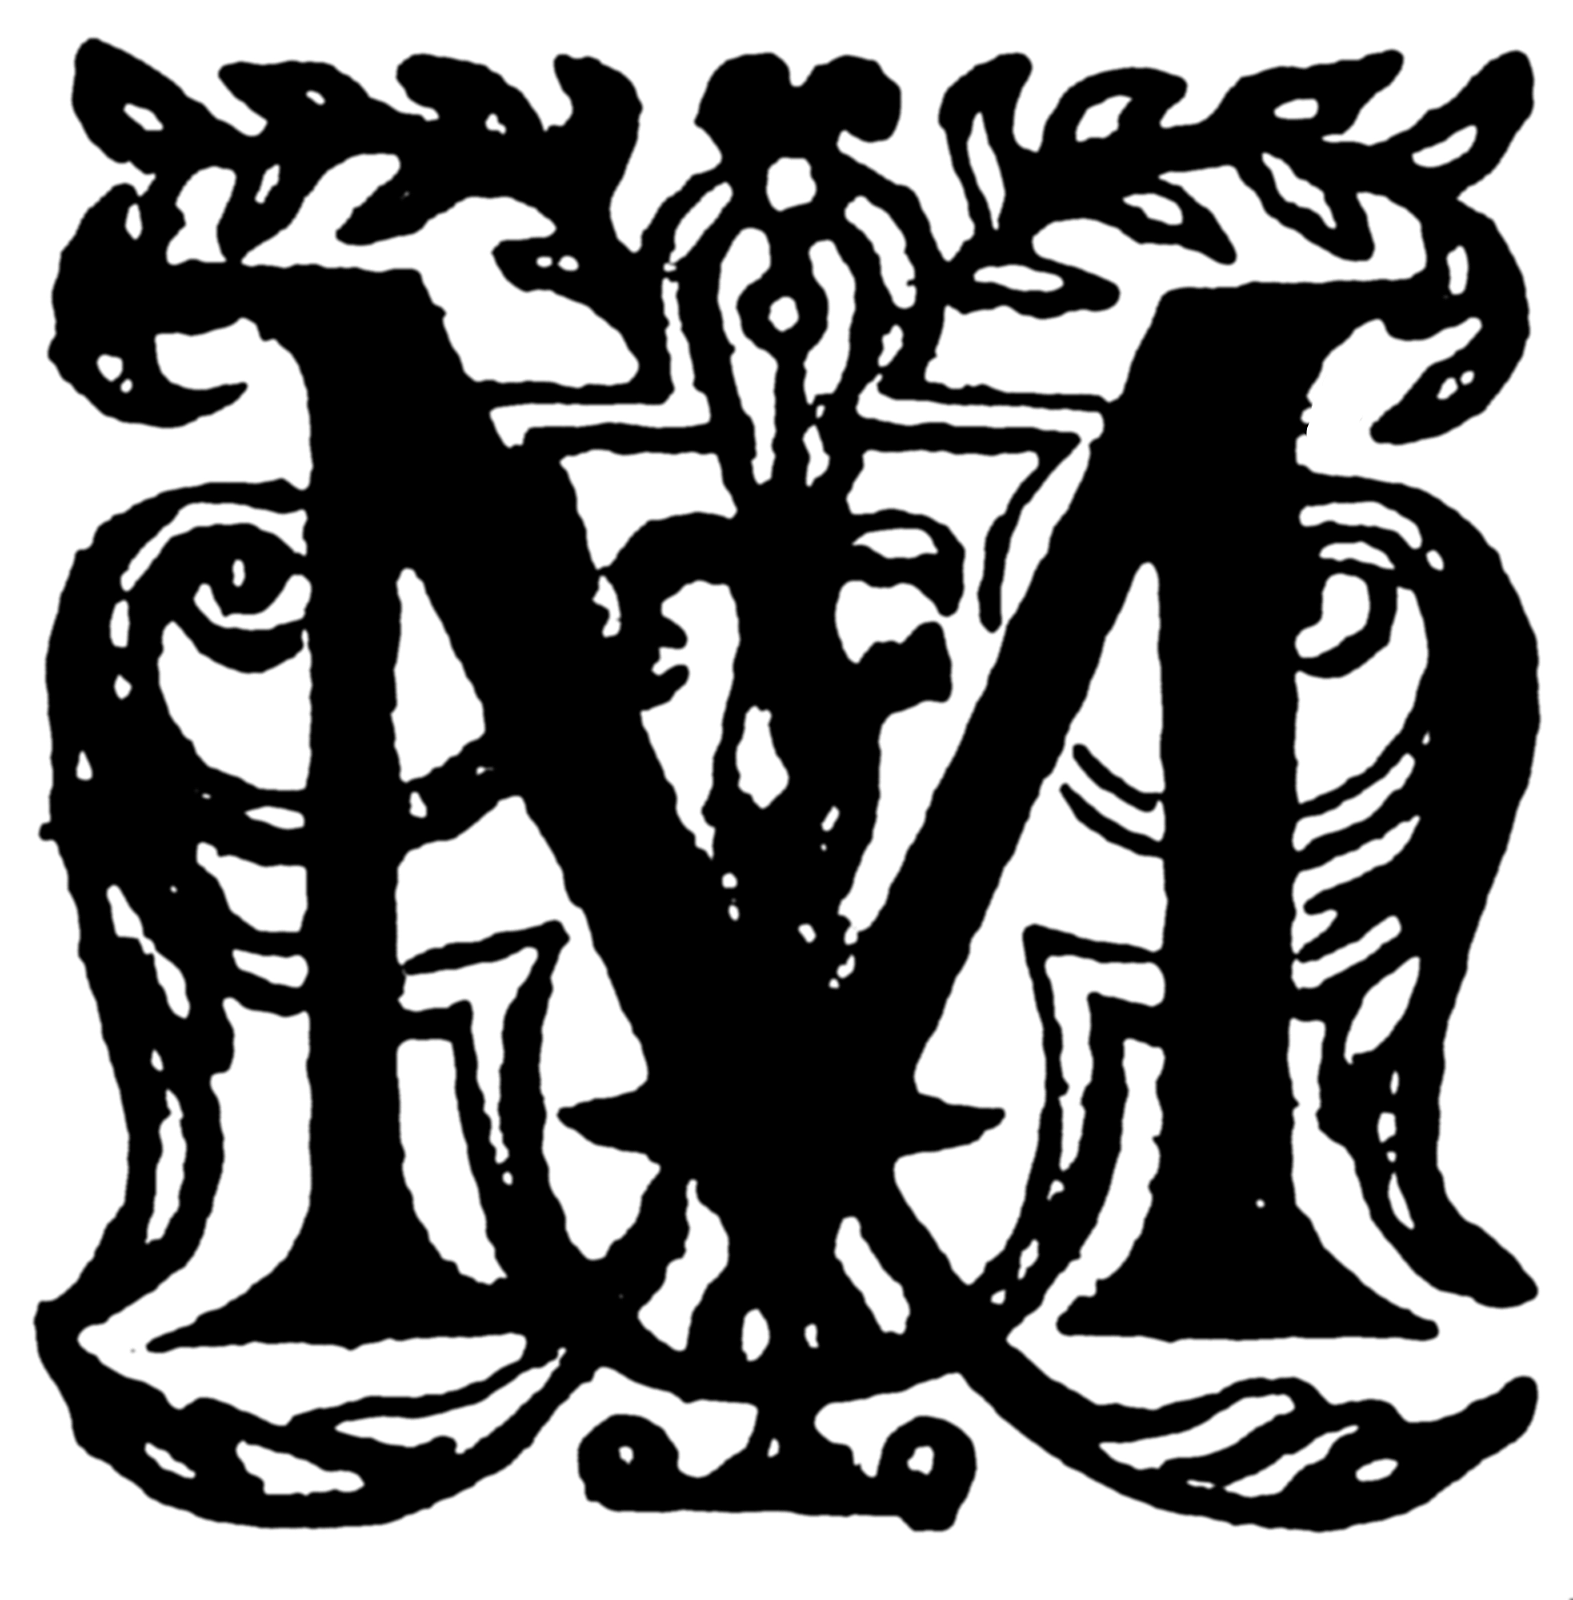 M, Ornate initial | ClipArt ETC